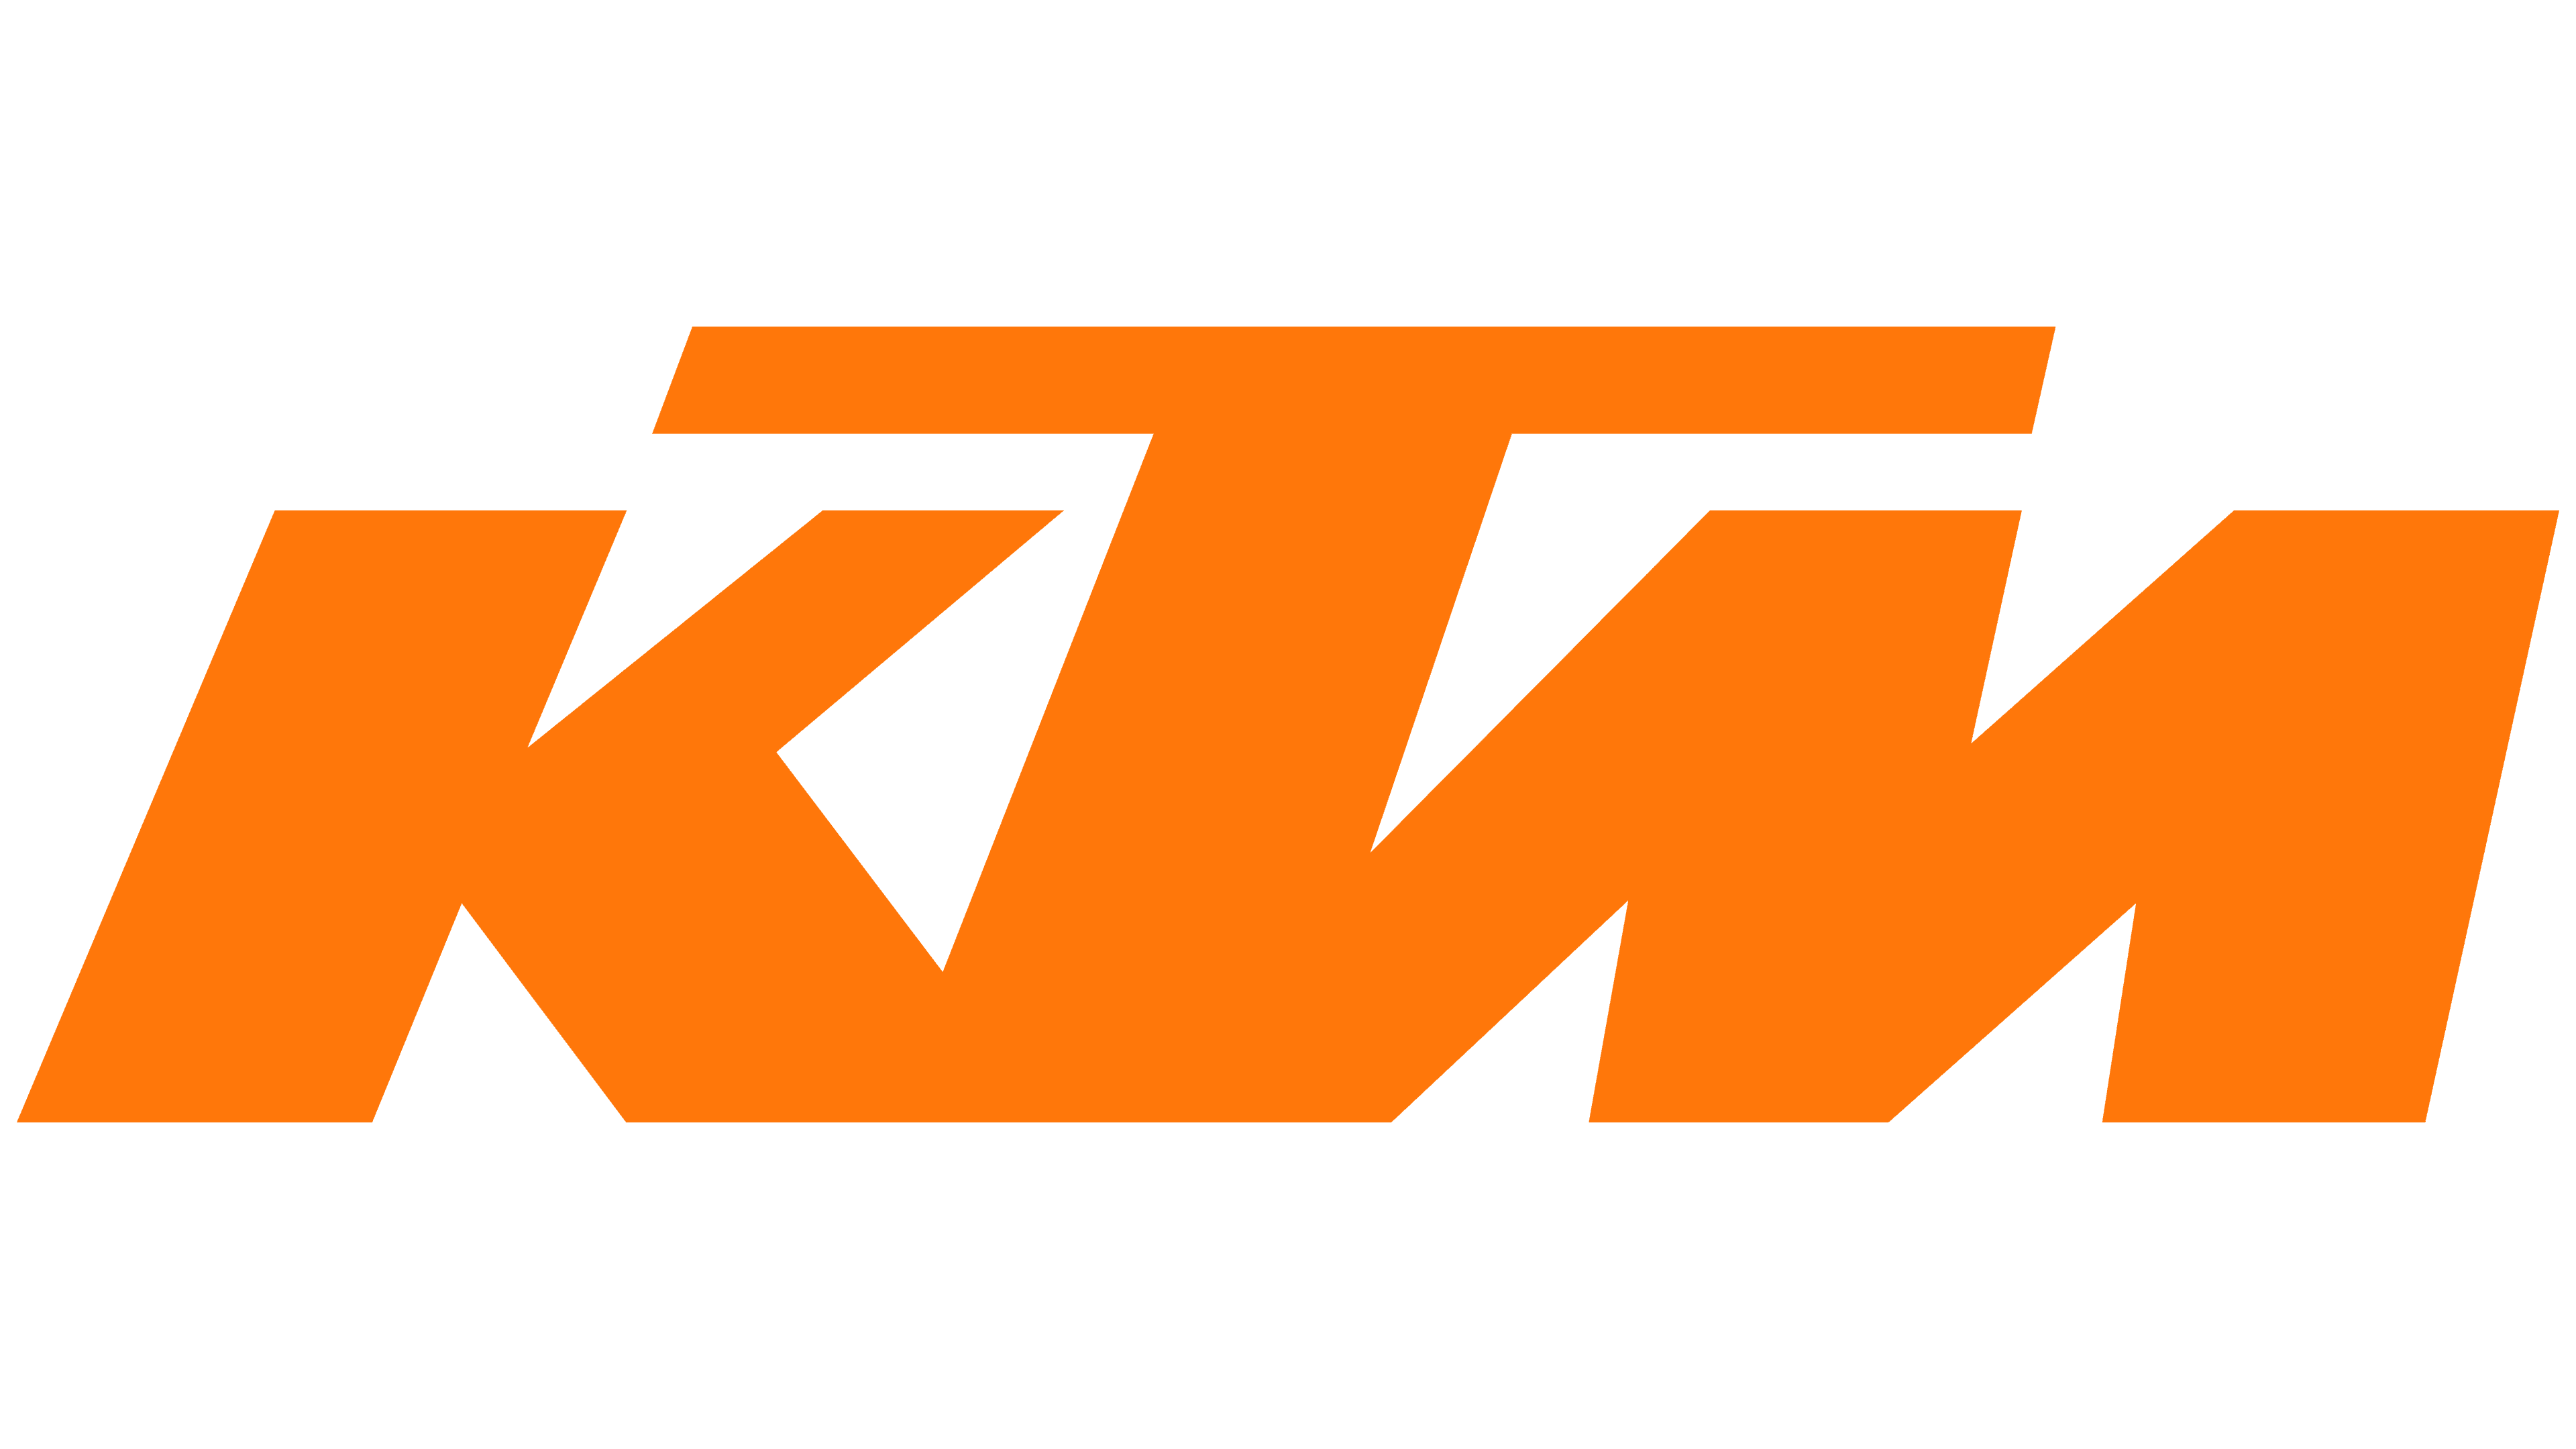 KTM-Logo-1996-1999